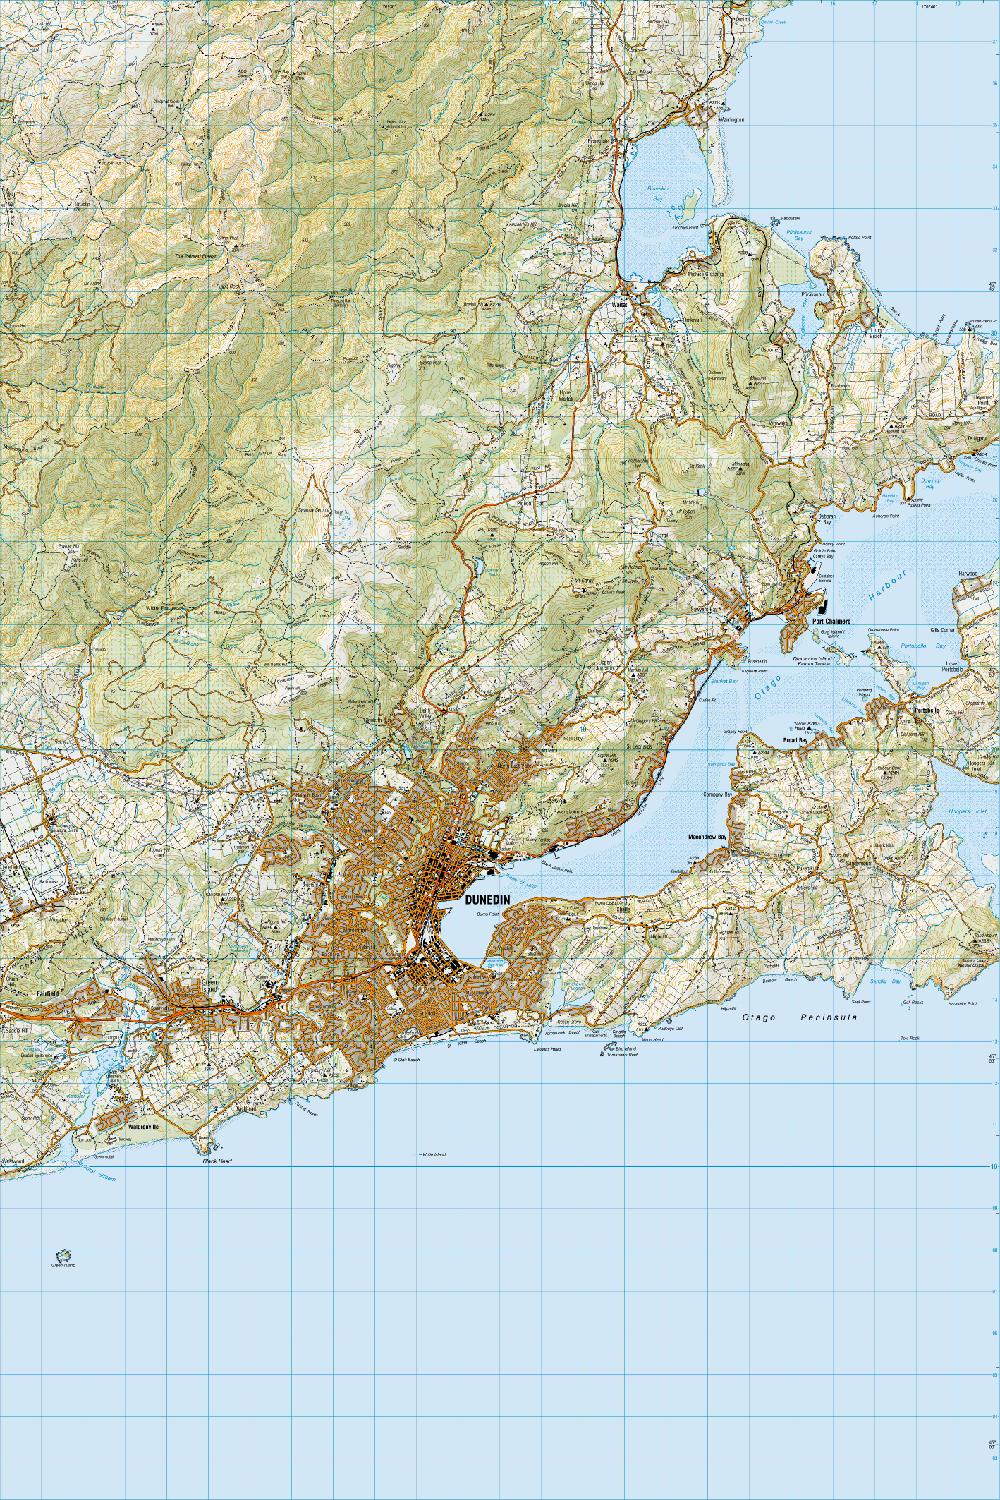 Topo map of Dunedin